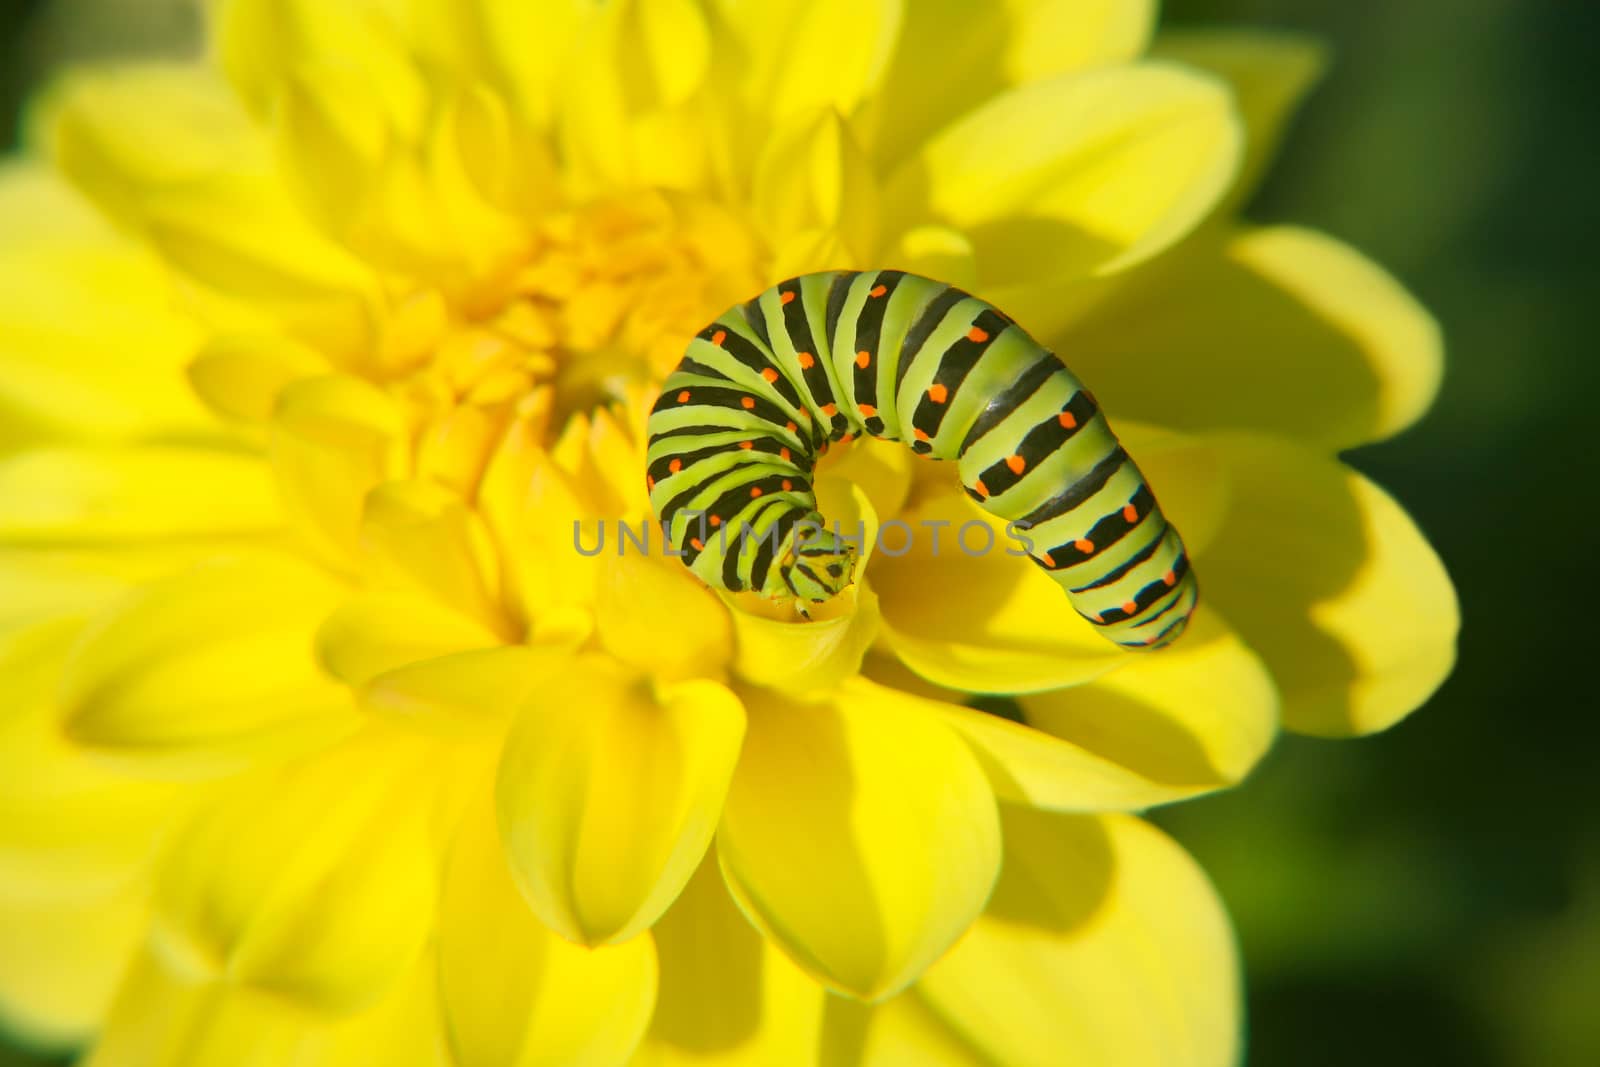 Caterpillar on yellow flower close up